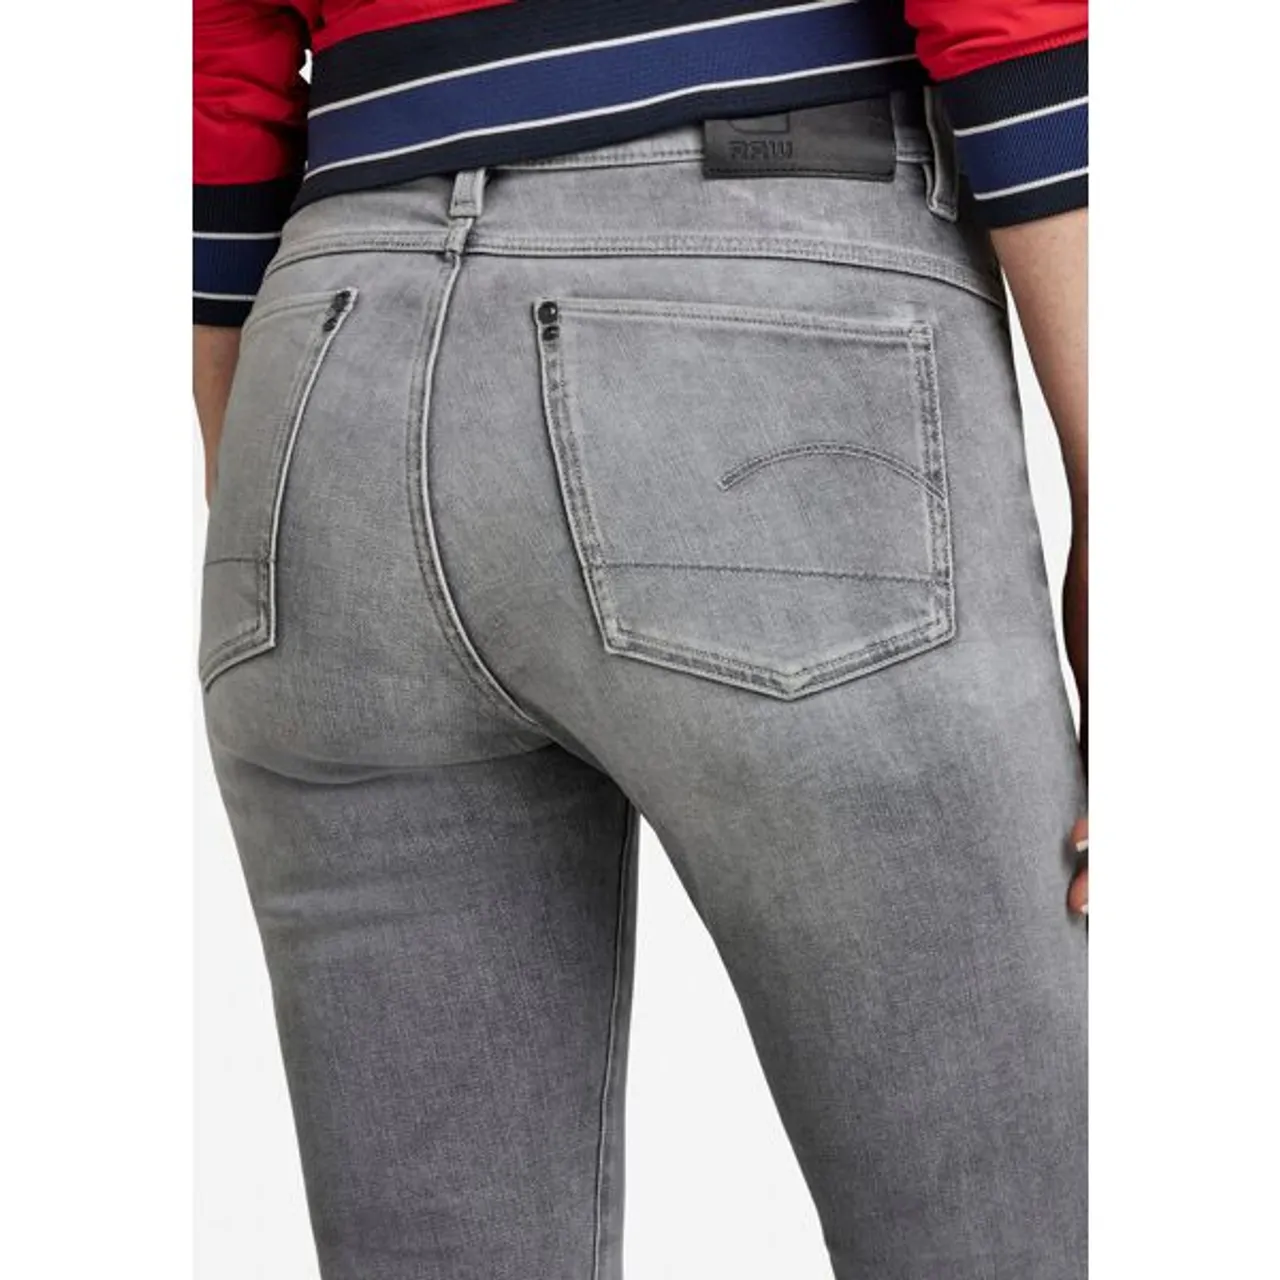 Skinny-fit-Jeans G-STAR RAW Gr. 29, Länge 32, grau (sun faded grey) Damen Jeans Röhrenjeans